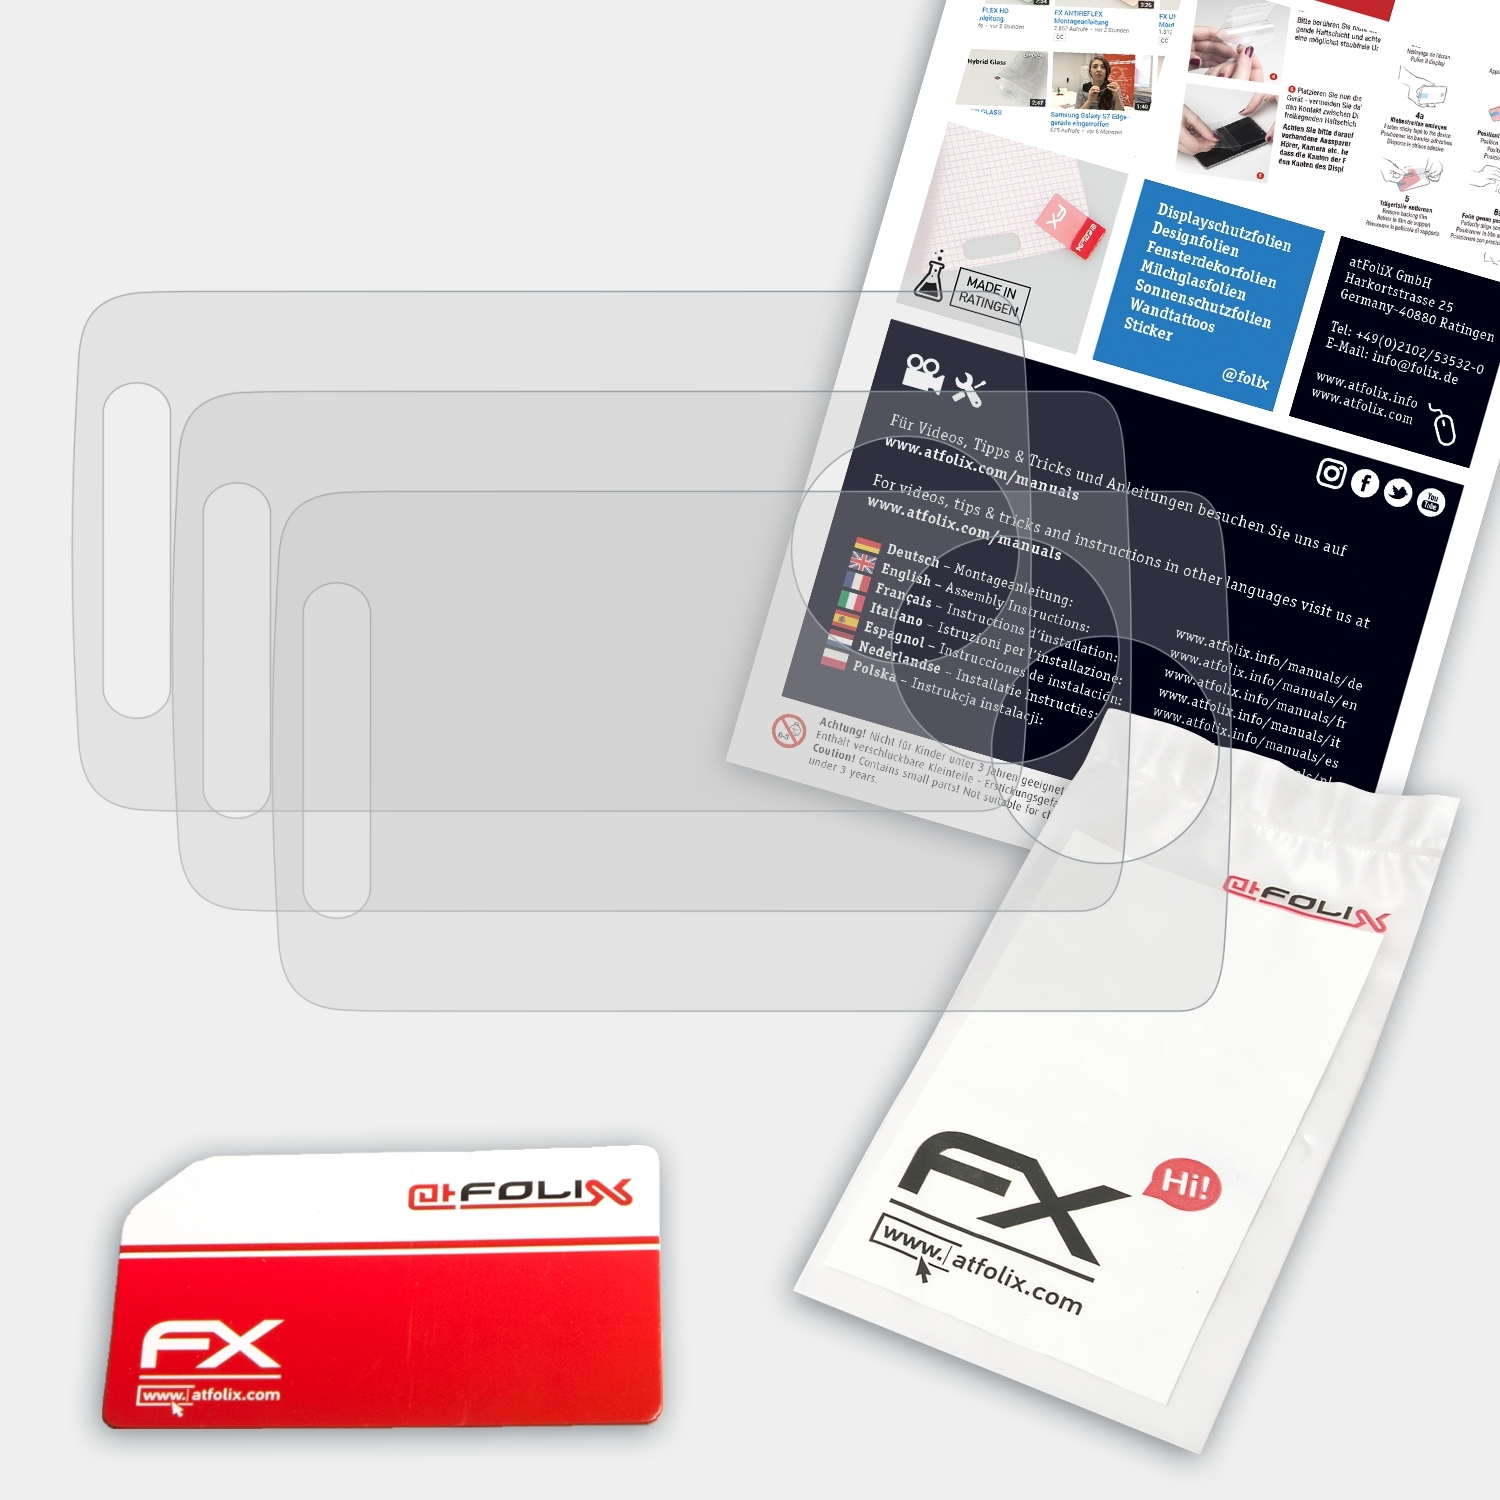 (Live Sony Displayschutz(für Kit)) FX-Antireflex View 3x ATFOLIX HDR-AZ1